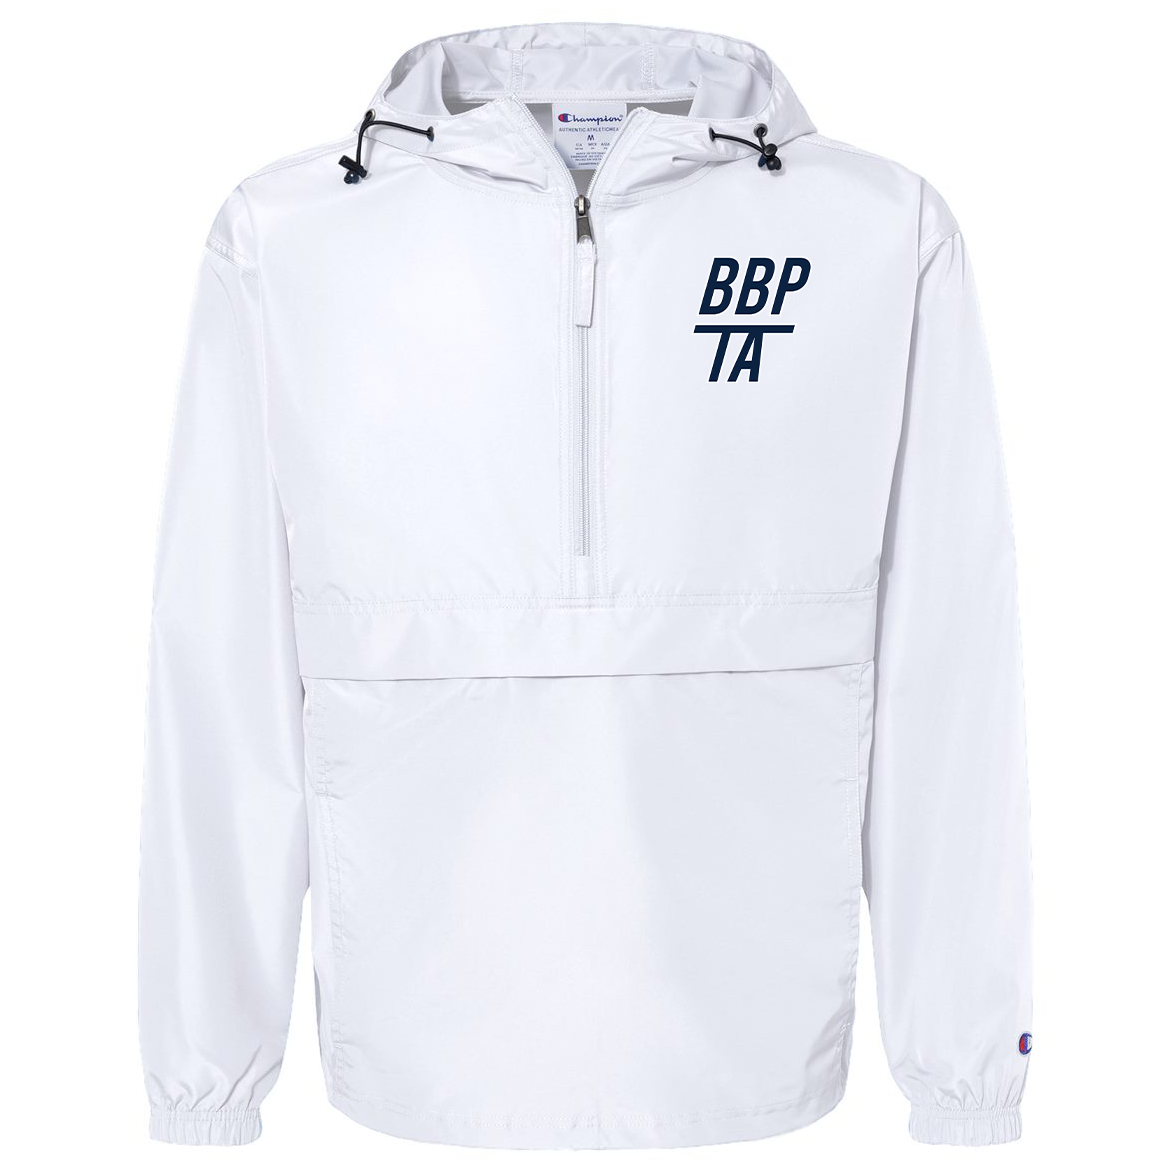 BBP TA Champion Packable Quarter-Zip Jacket